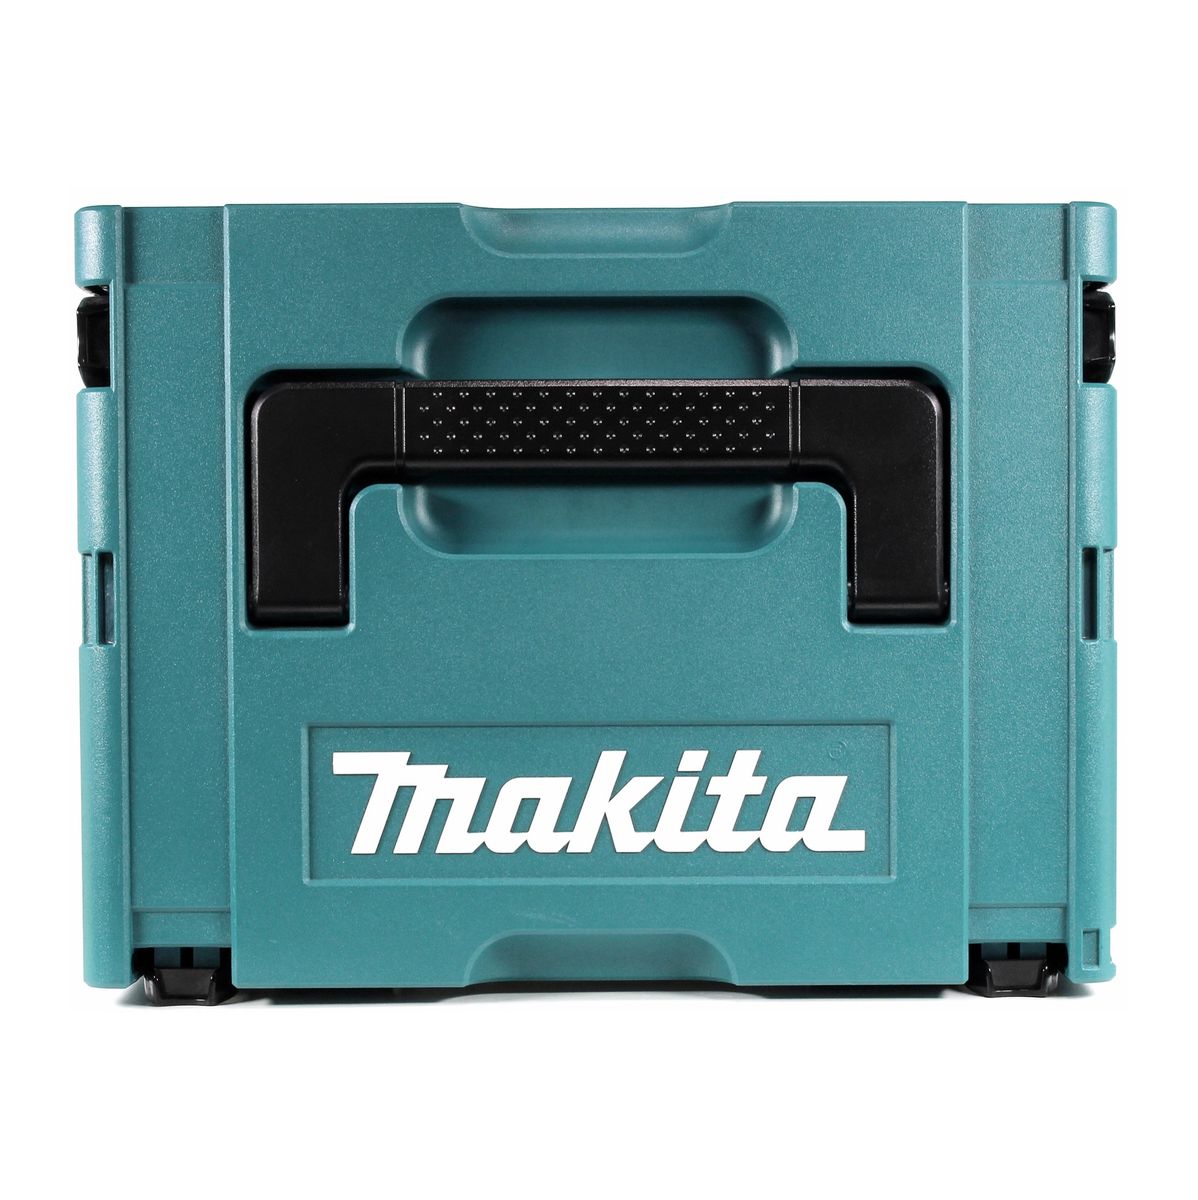 Makita DTD 155 G1J Akku Schlagschrauber 18 V 140 Nm 1/4" Brushless + 1x Akku 6,0 Ah + Makpac - ohne Ladegerät